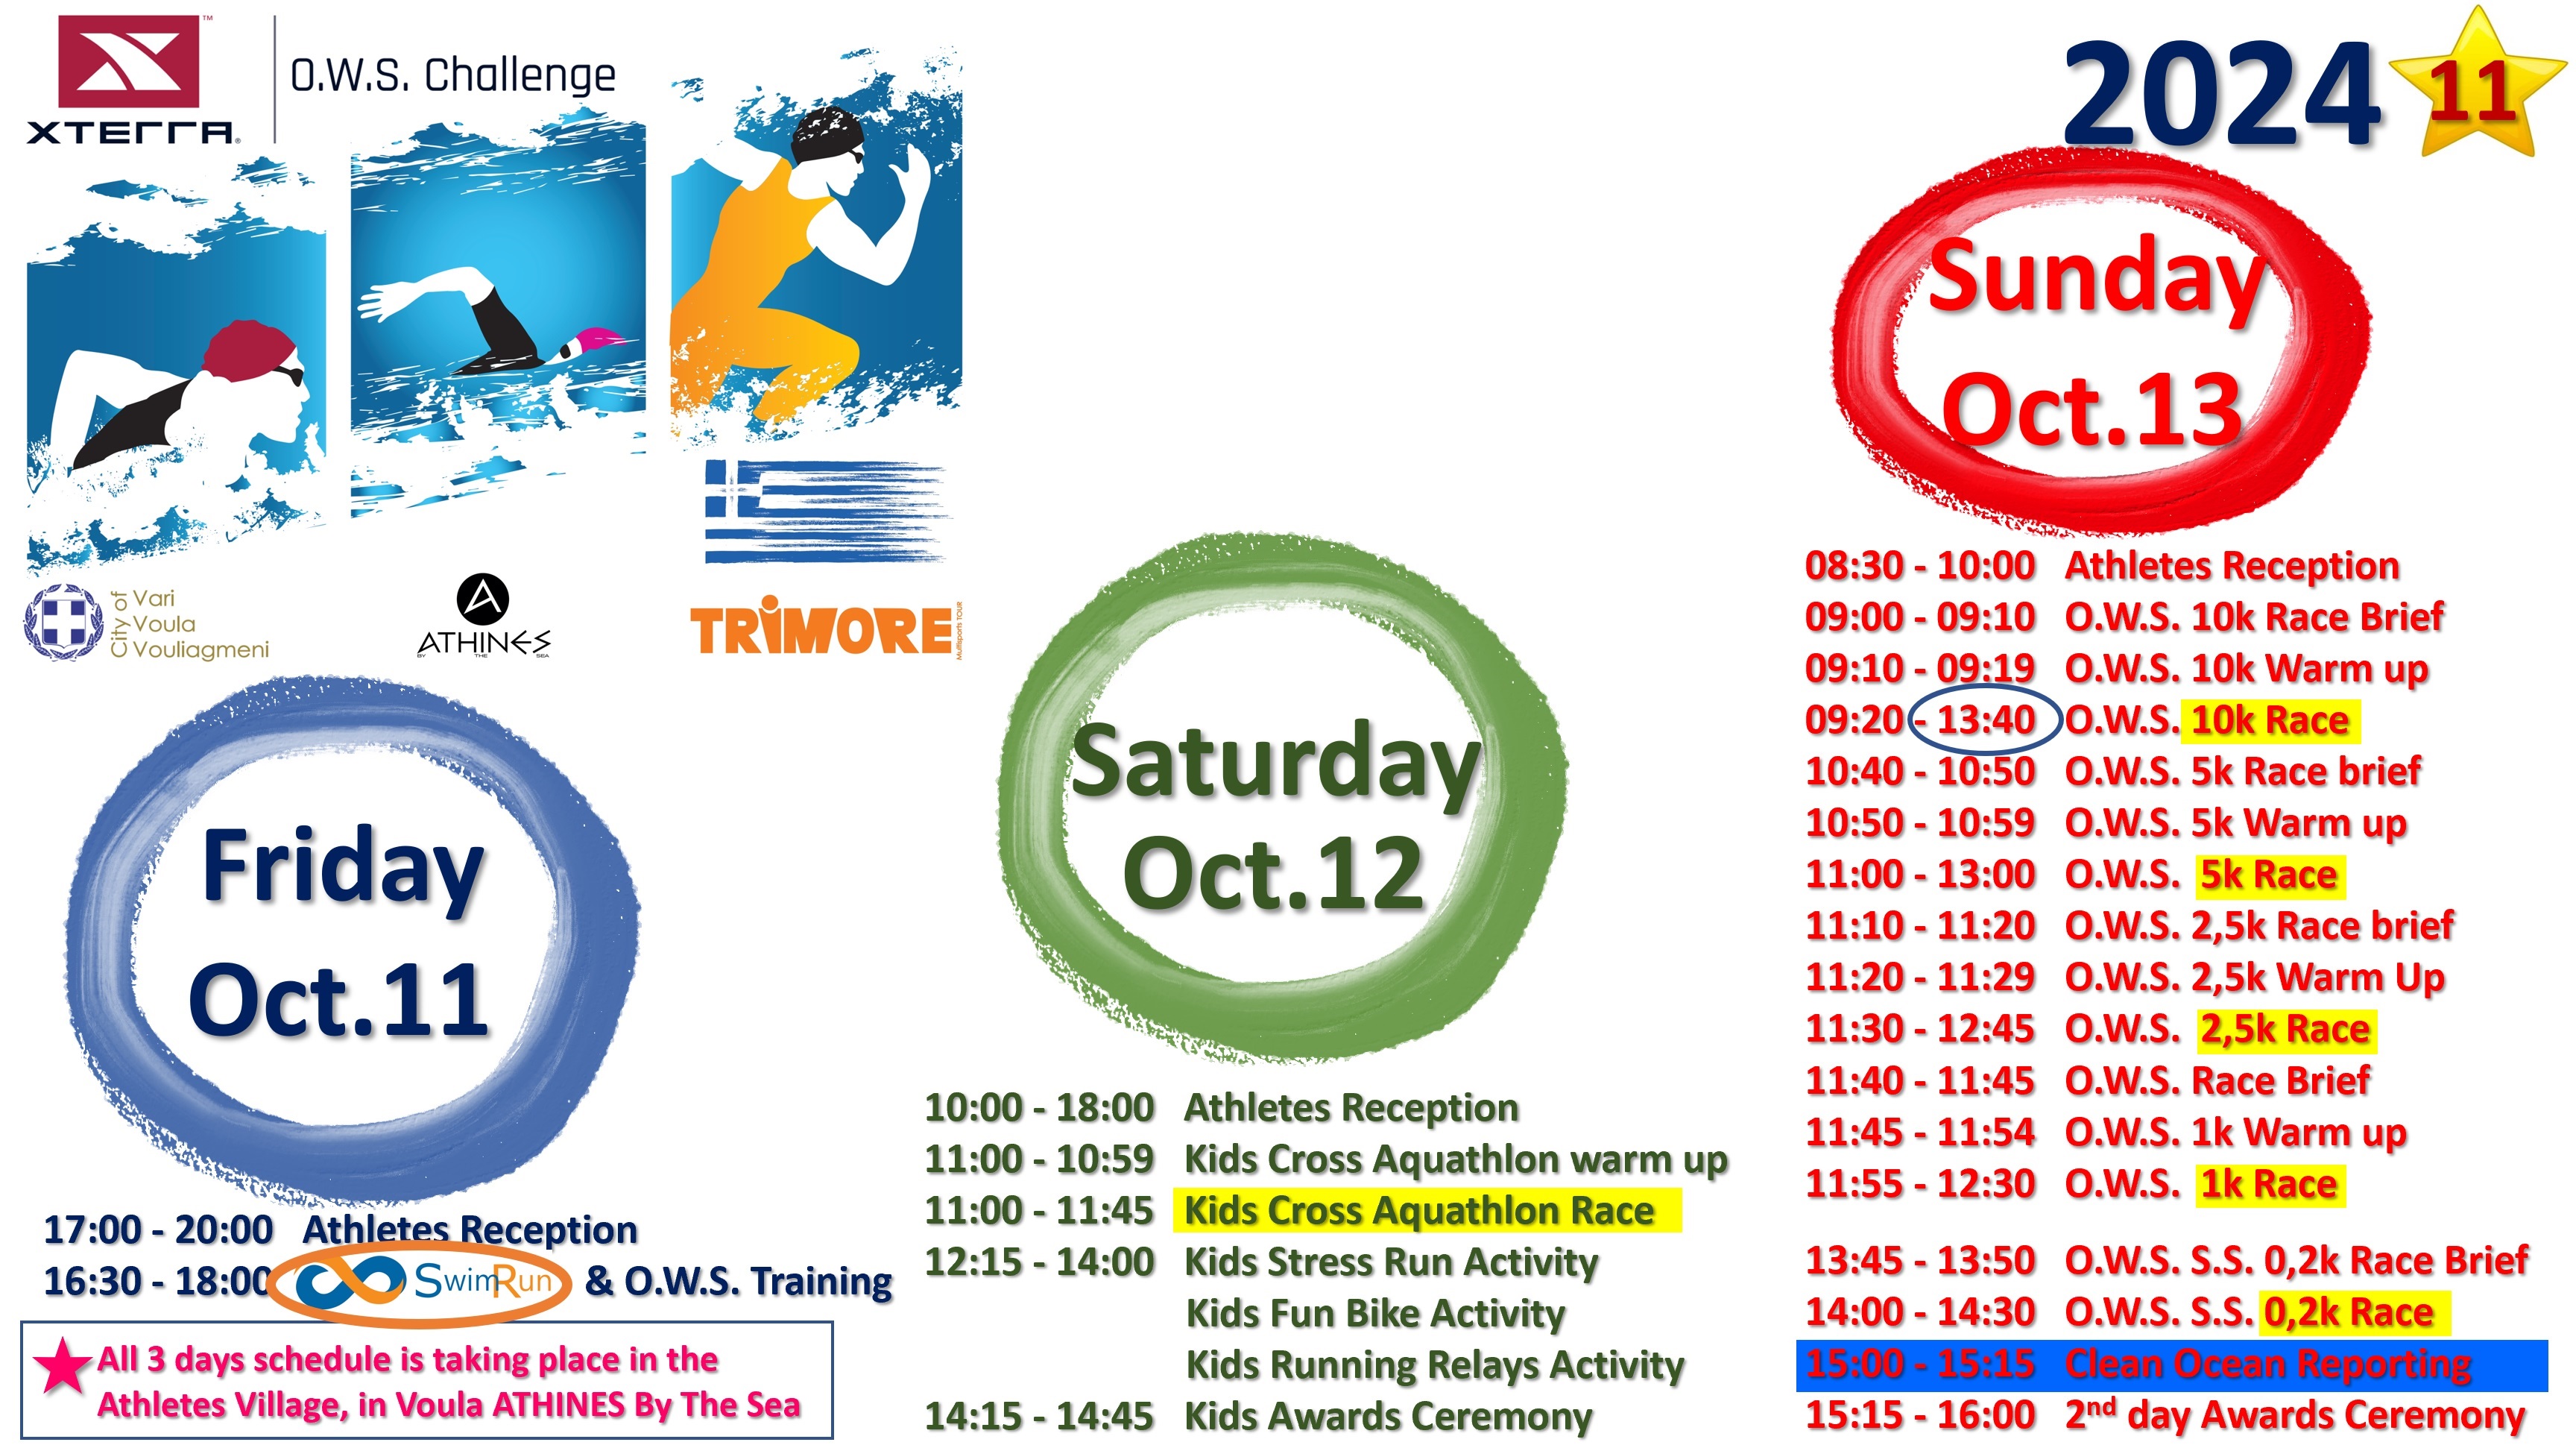 20241 XTERRA OWS Challenge Events Schedule